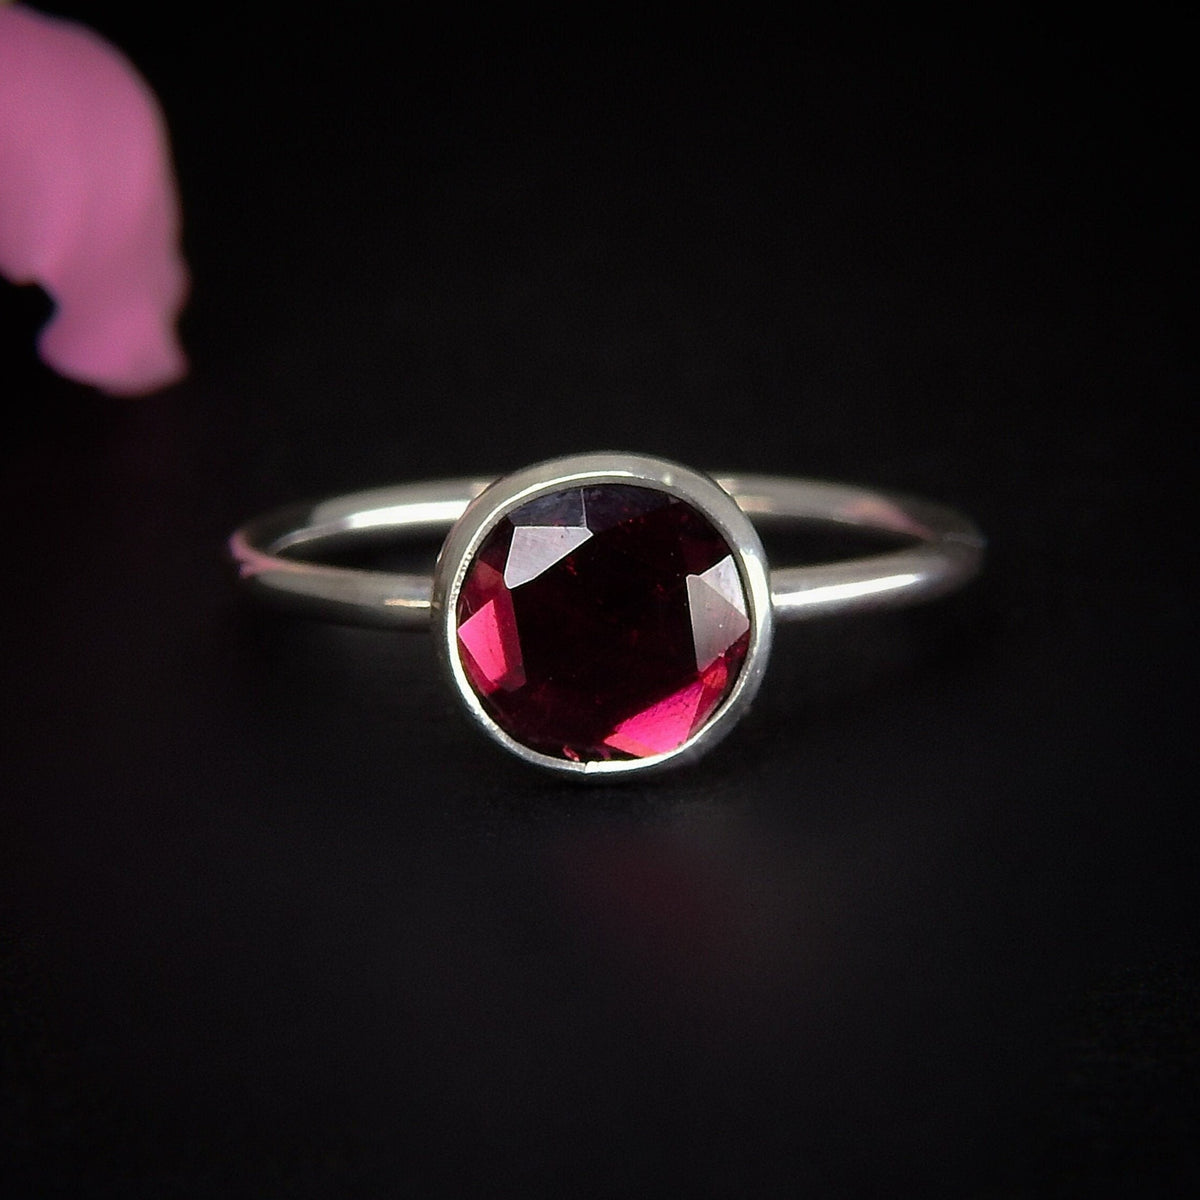 Rose Cut Rhodolite Garnet Ring - Size 9 1/4- Sterling Silver - Faceted Garnet Jewelry, Pink Garnet Jewellery, Dainty Garnet Ring, Red Garnet